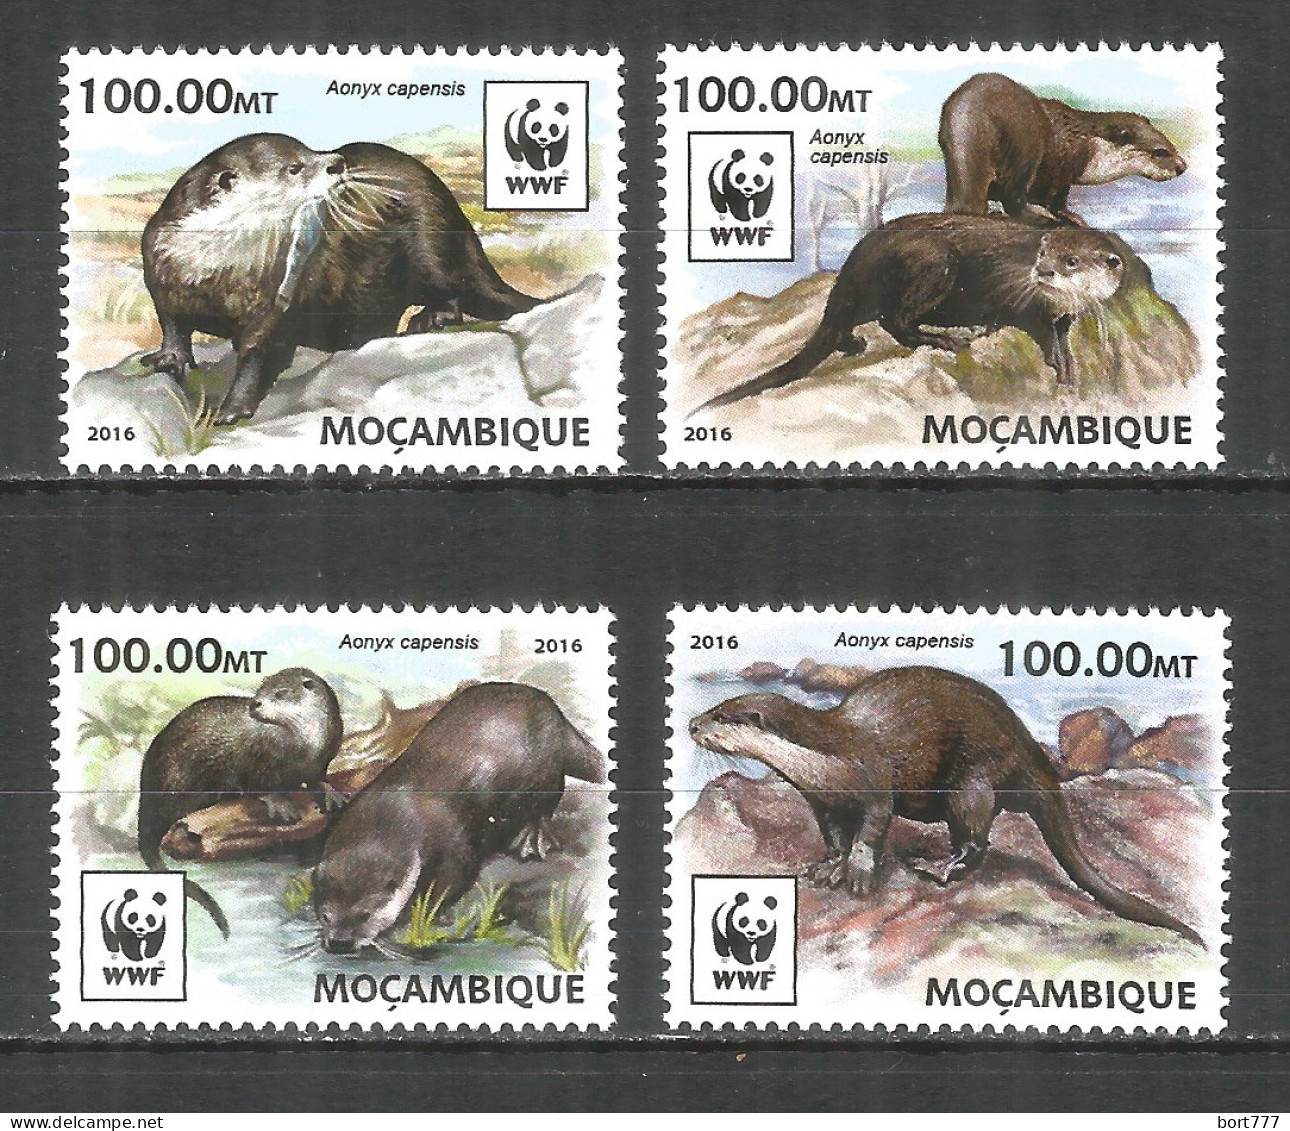 Mozambique 2016 Mint Stamps MNH(**) WWF – Otter - Mozambique